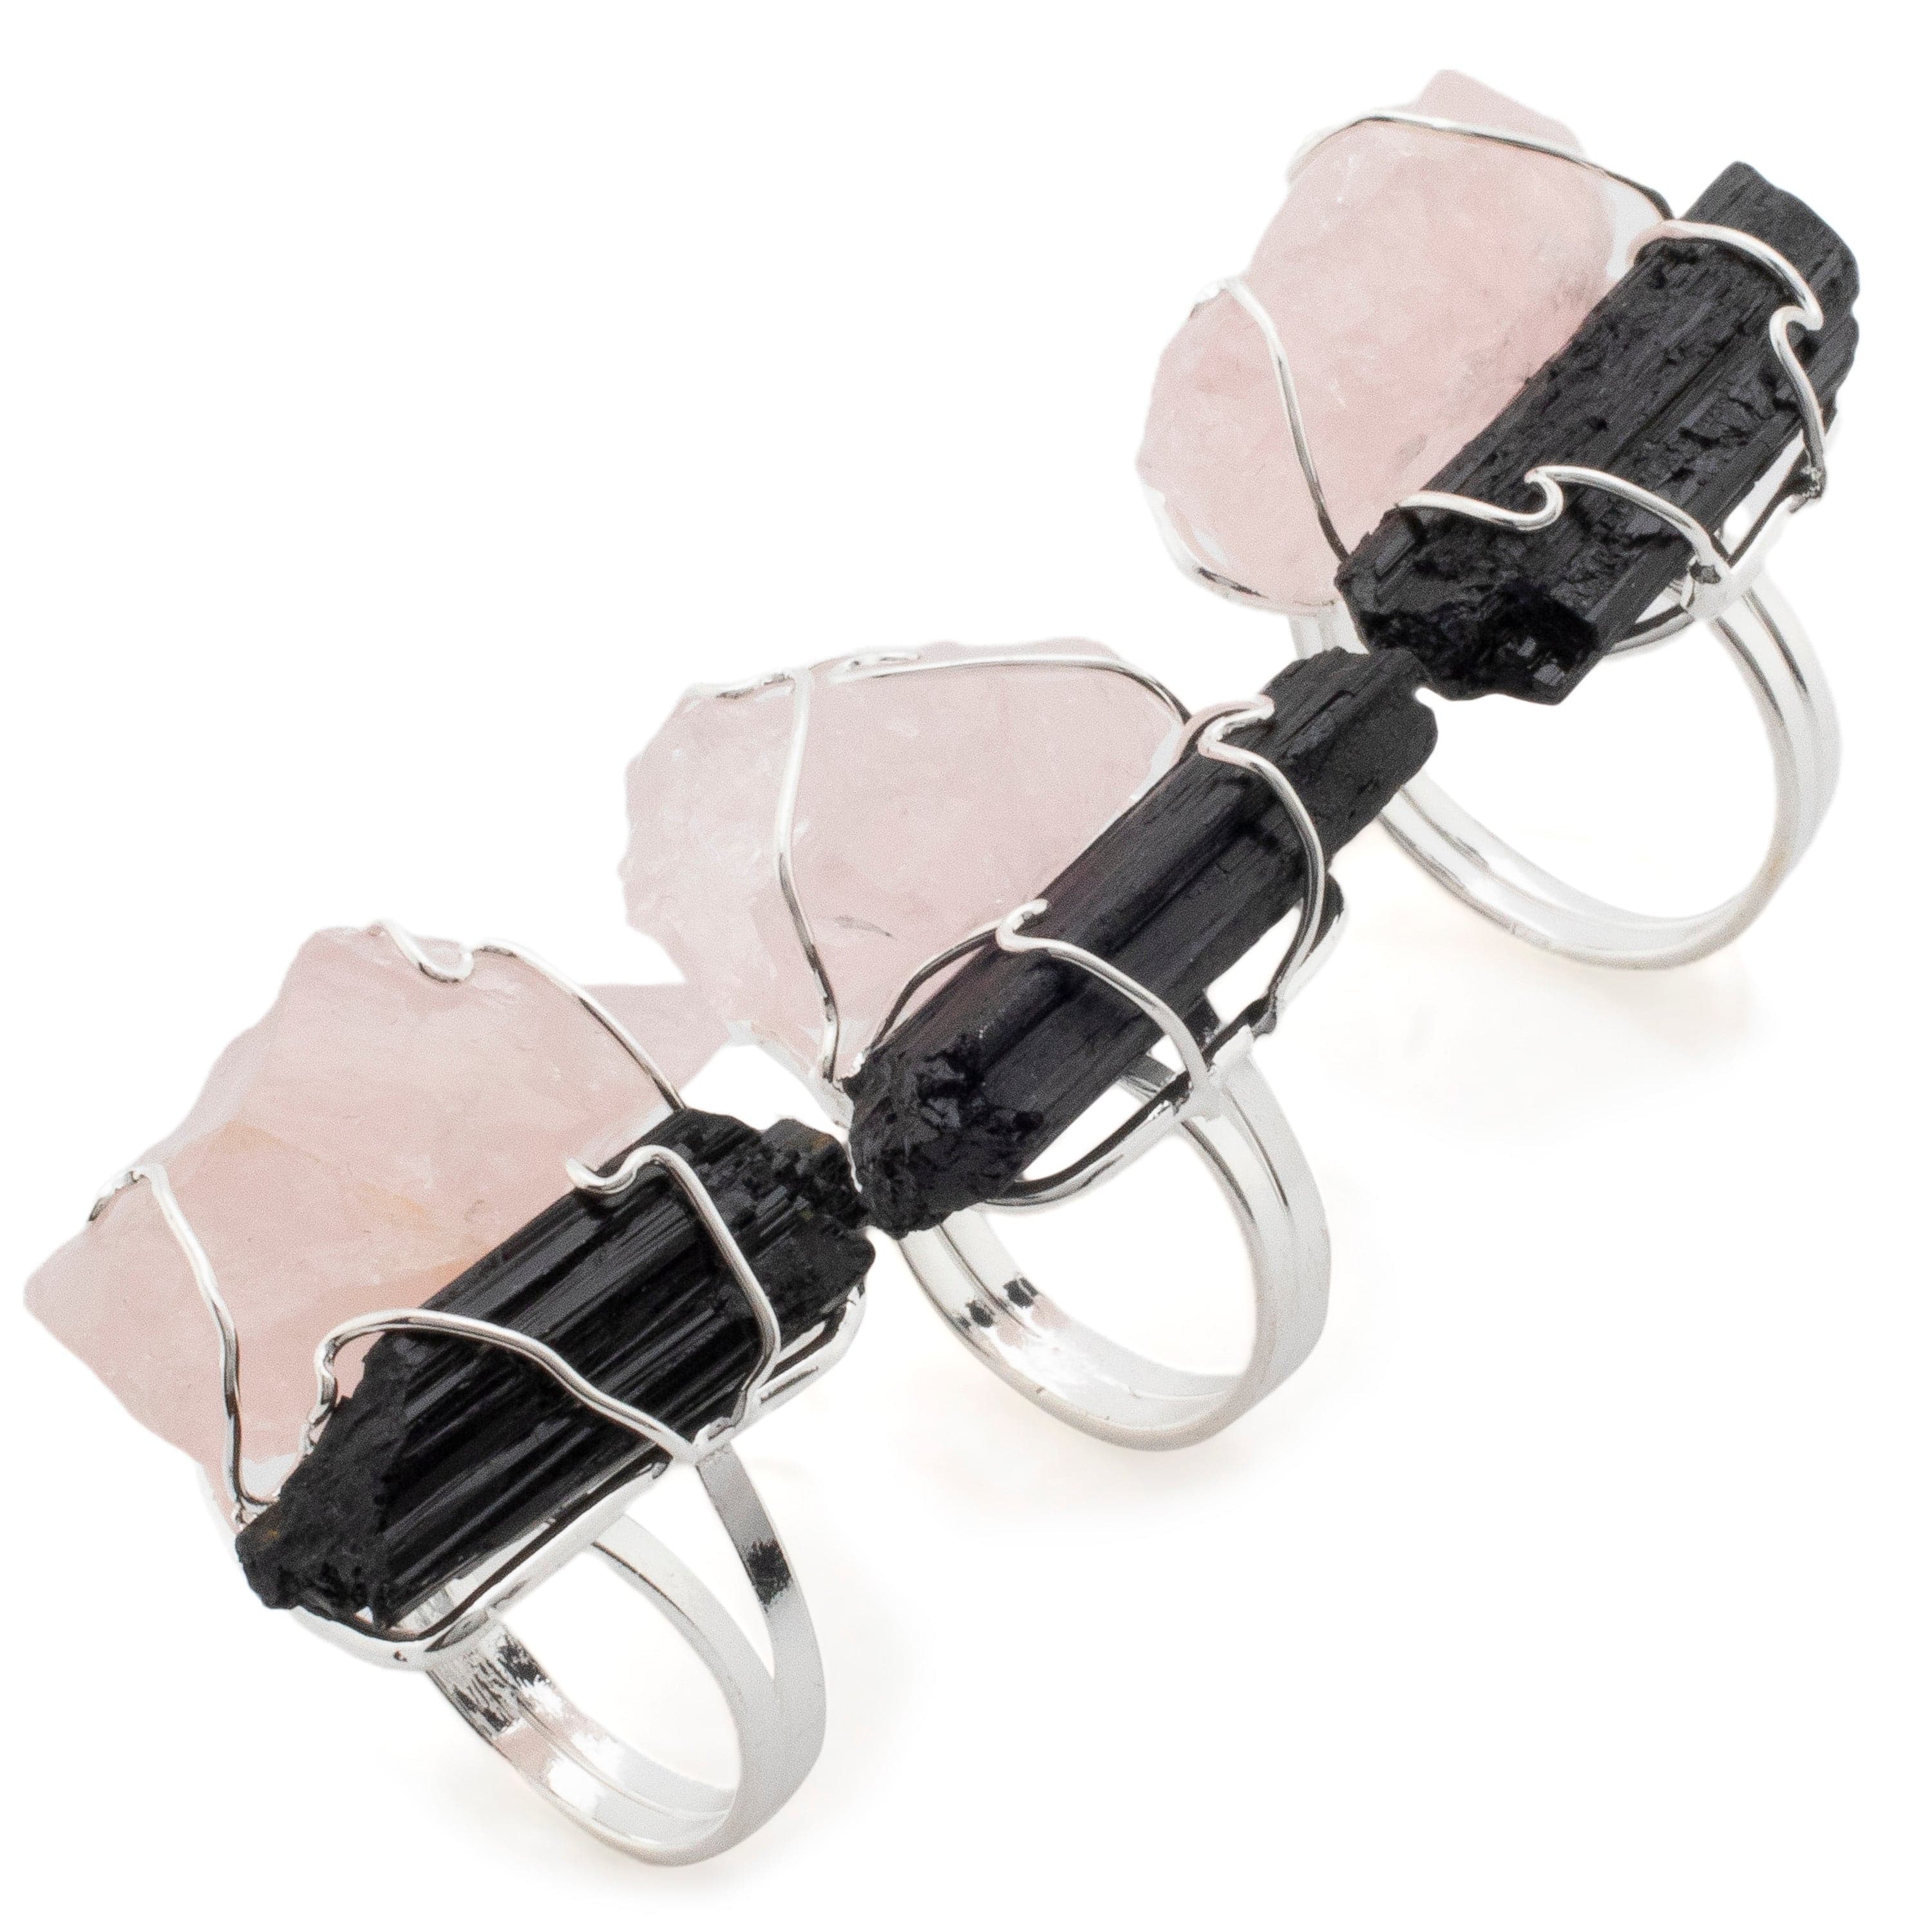 Kalifano Crystal Jewelry Rose Quartz and Black Tourmaline Adjustable Ring CJR-507-R+T